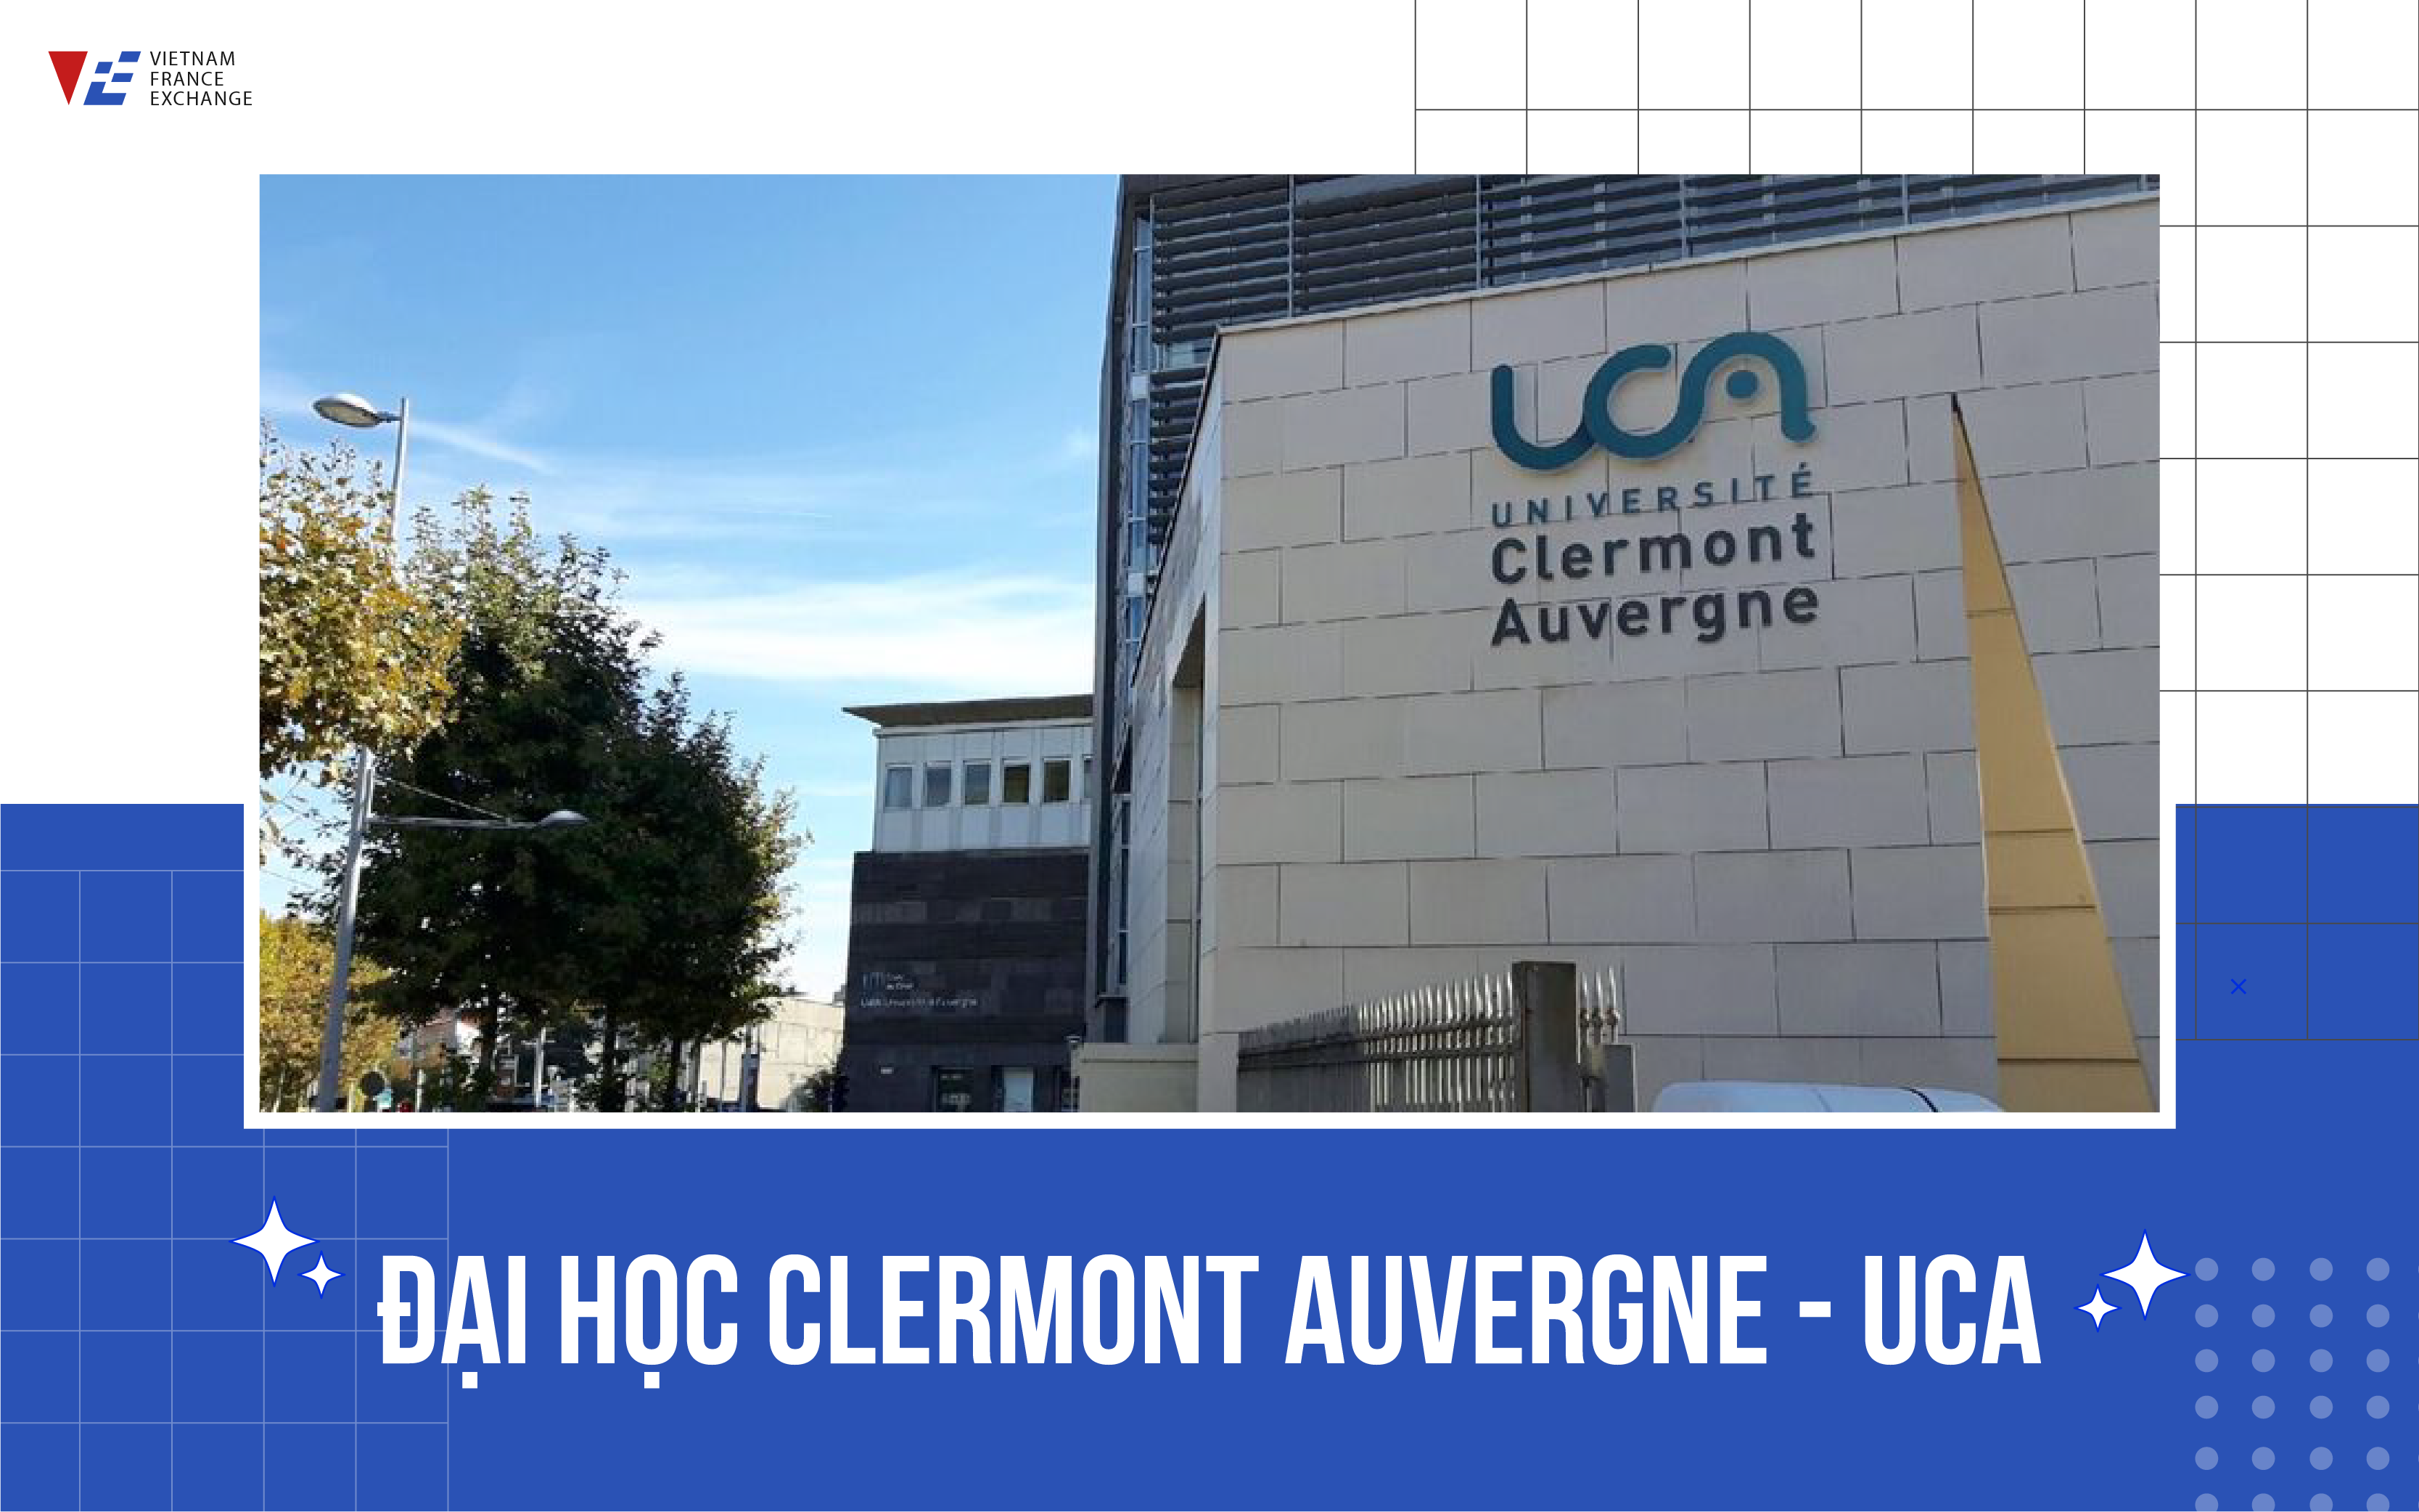 VFE-Vietnam-France-Exchange-truong-Clermont-Auvergne-UCA-2